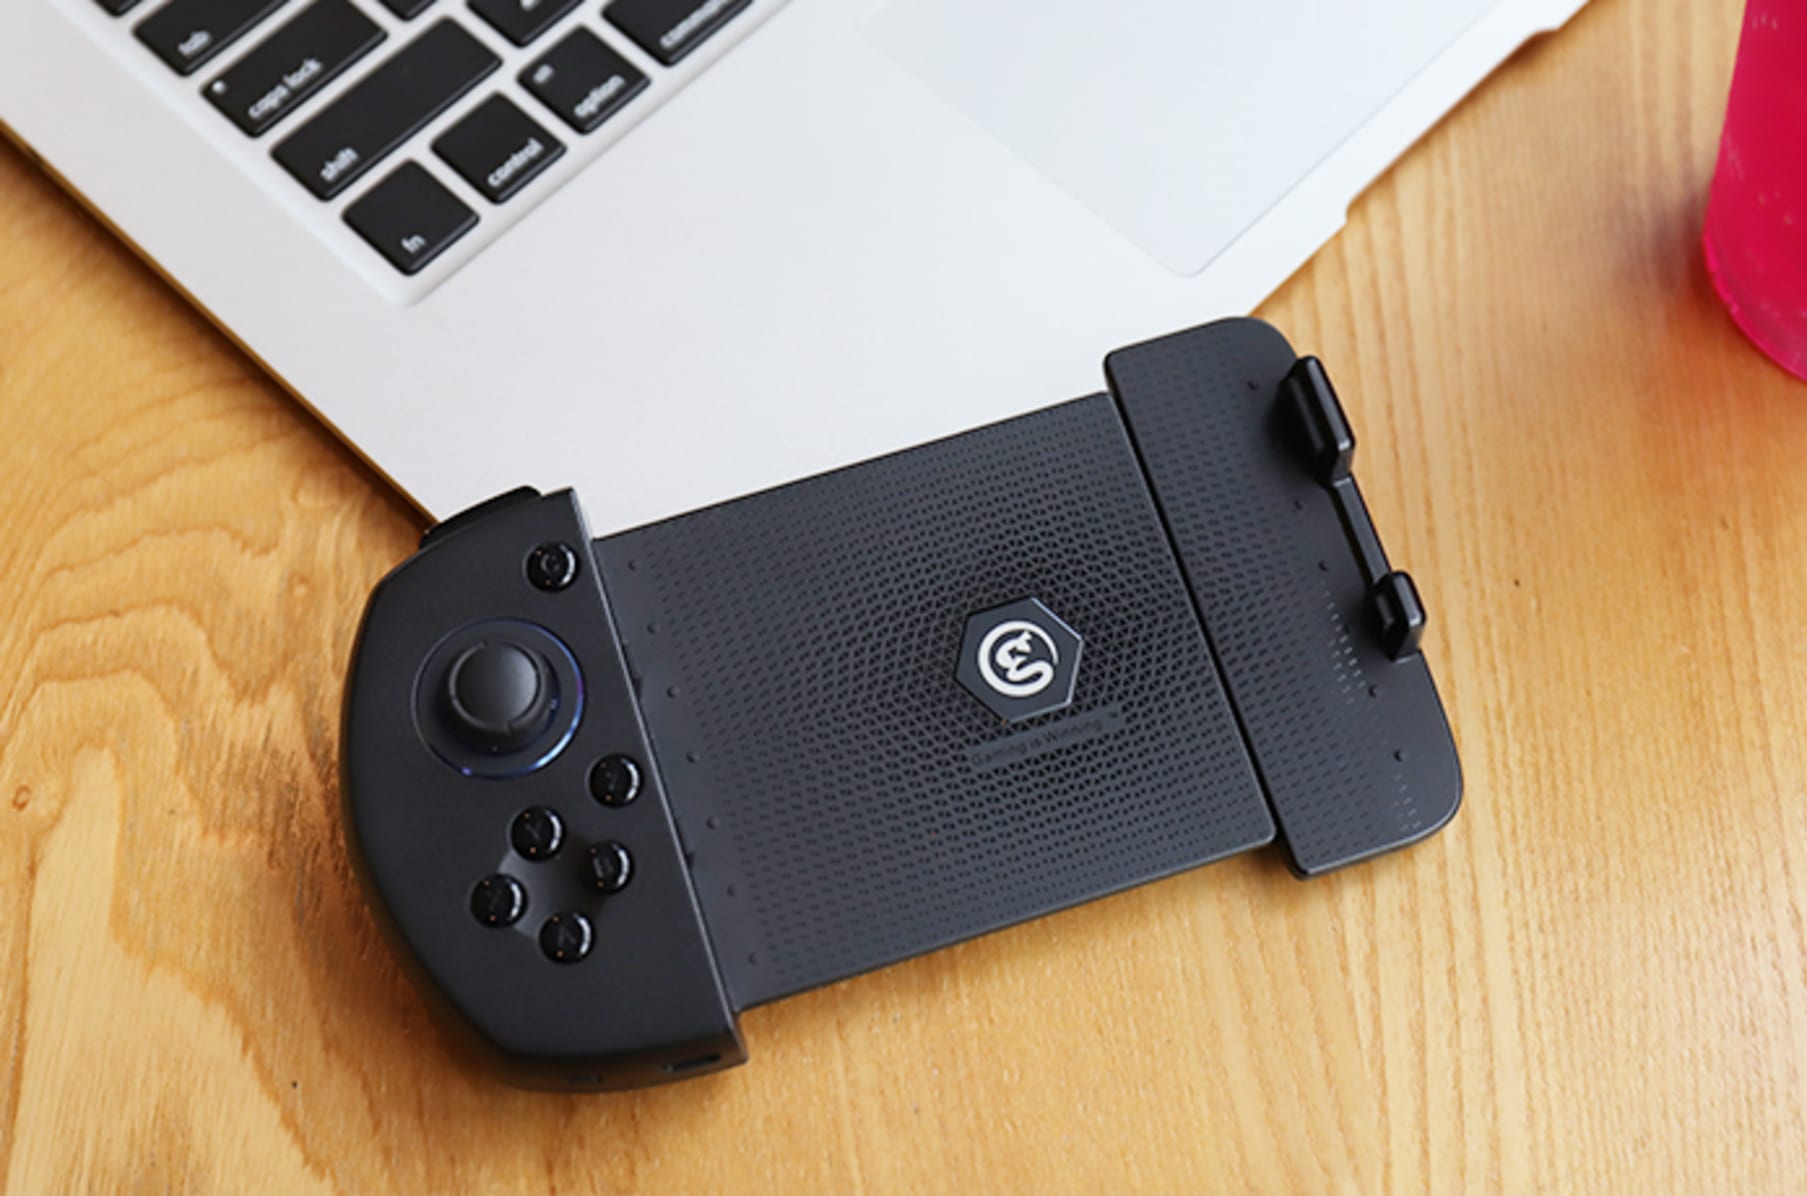 GameSir G6/G6s Mobile Gaming Touchroller Controller Android/iOS